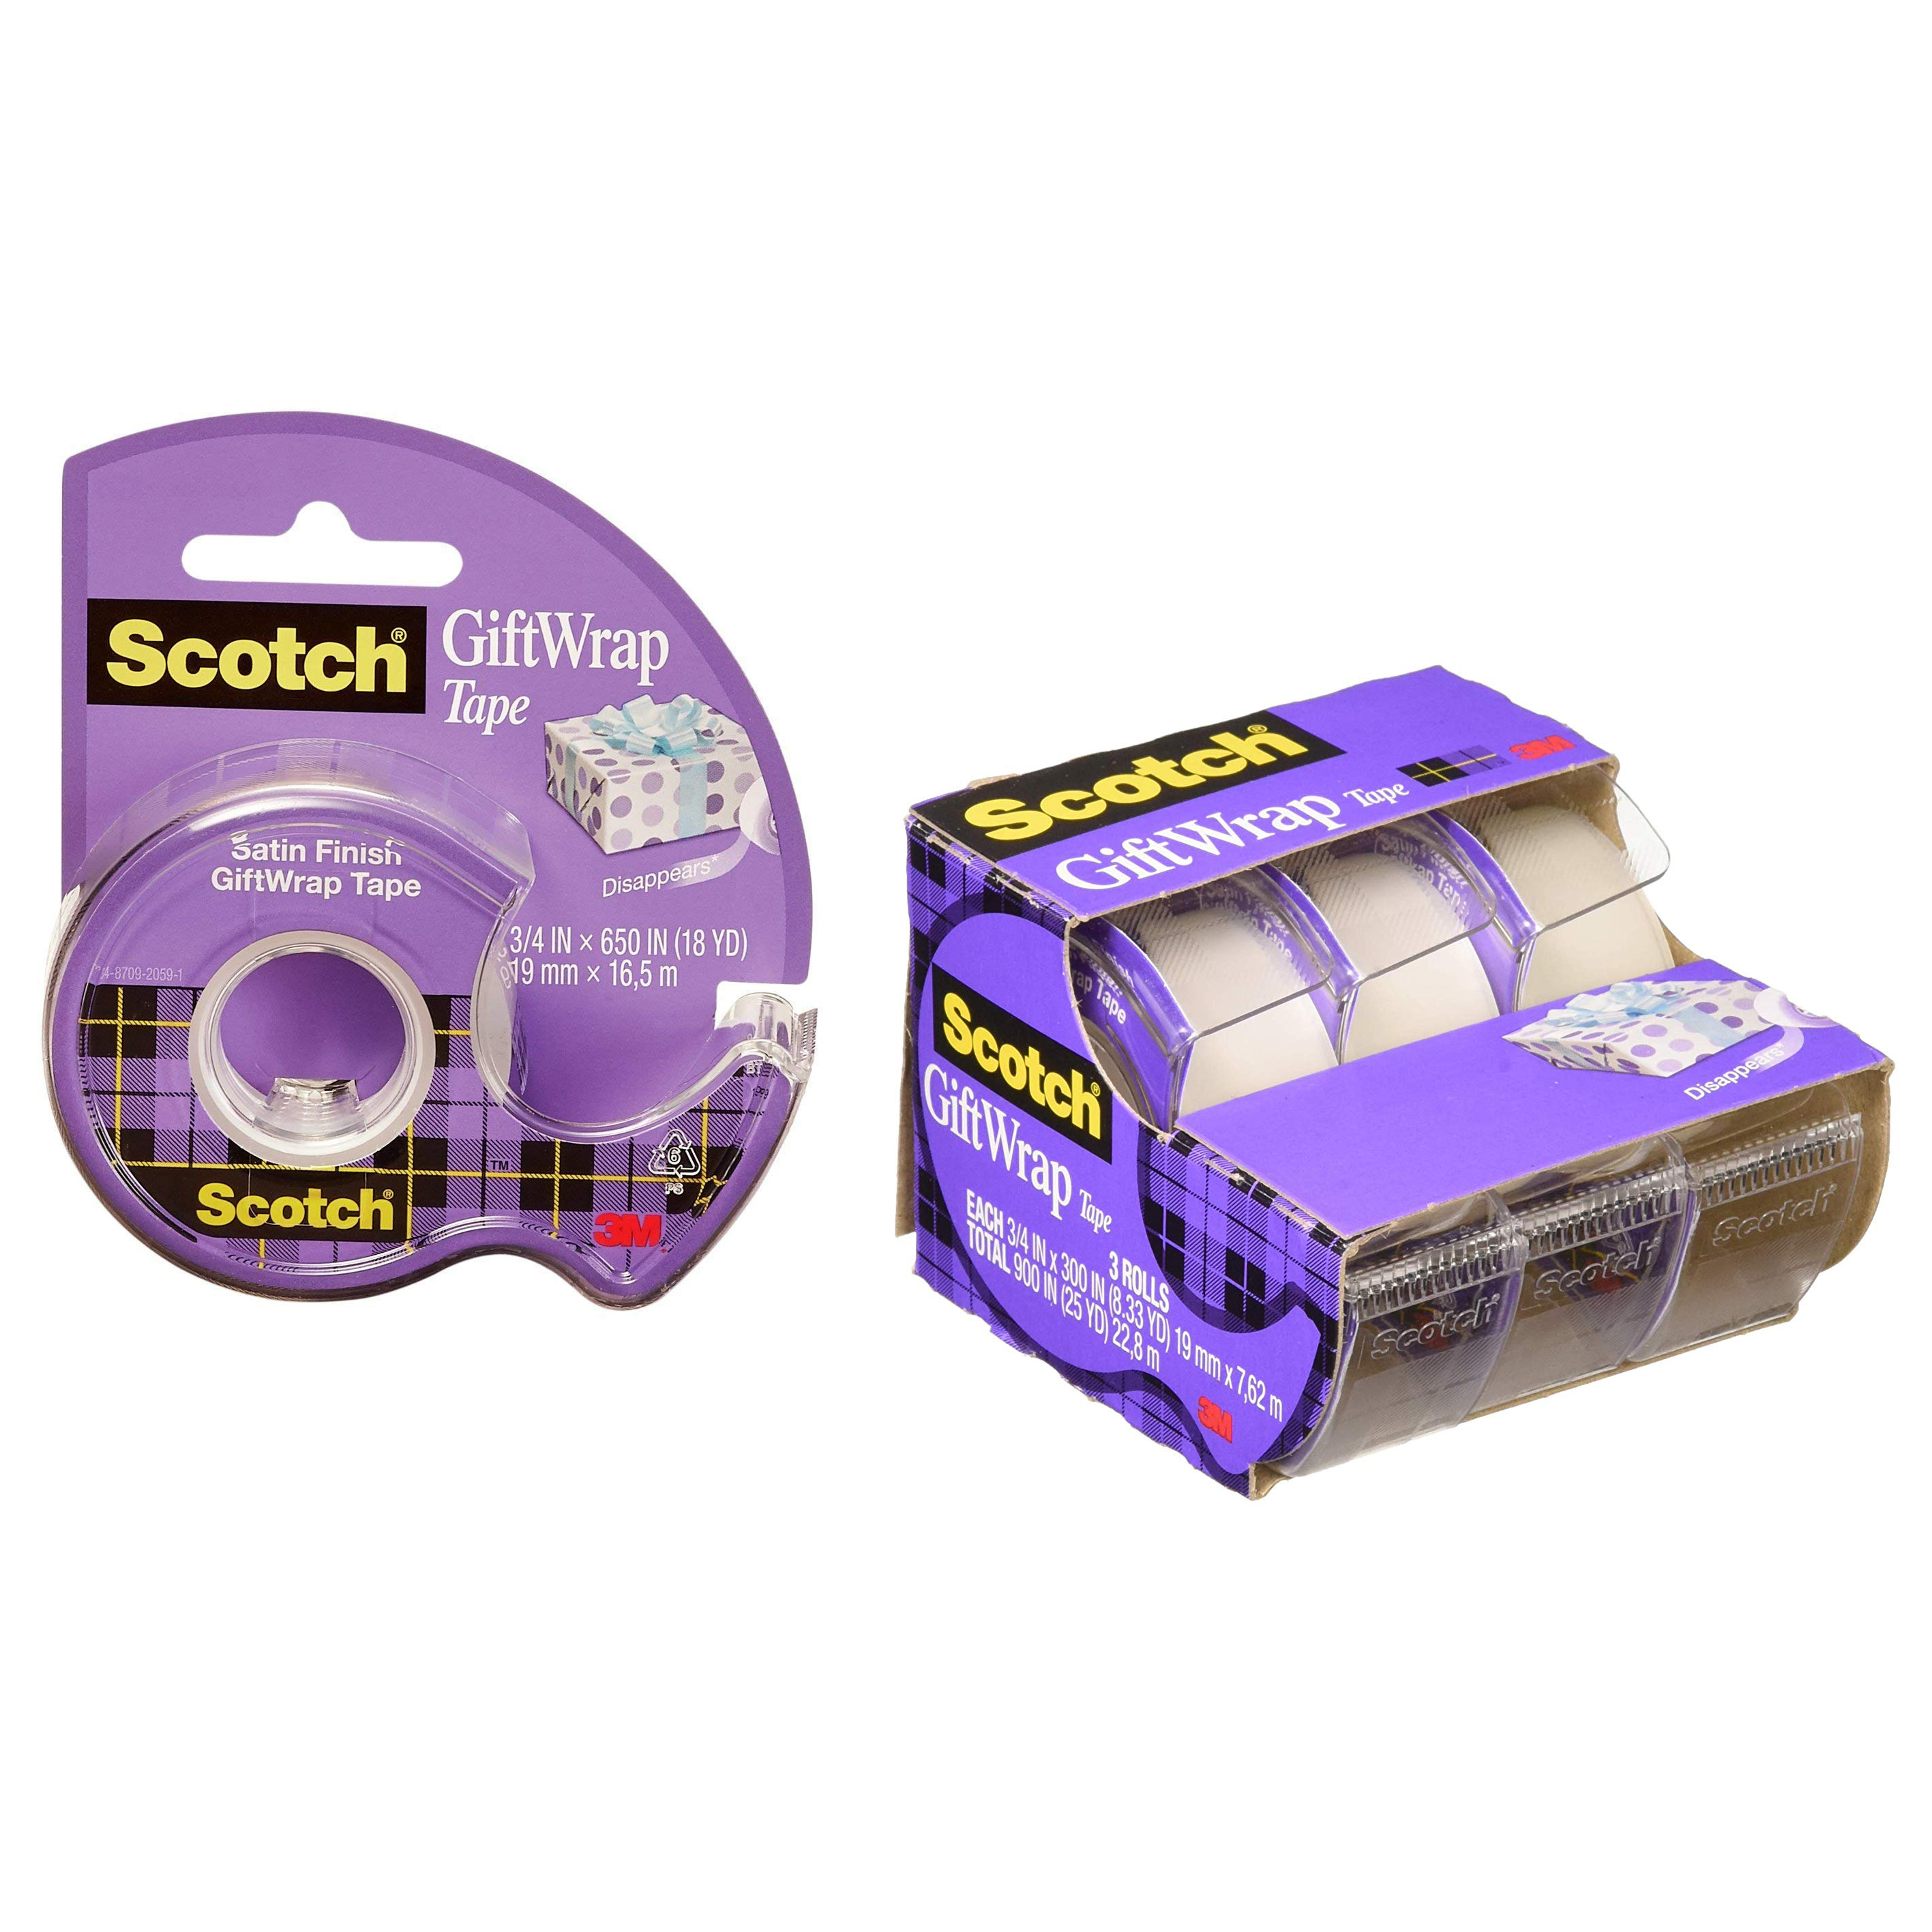 2 Scotch ® GiftWrap Tape 3/4 in x 350 in 